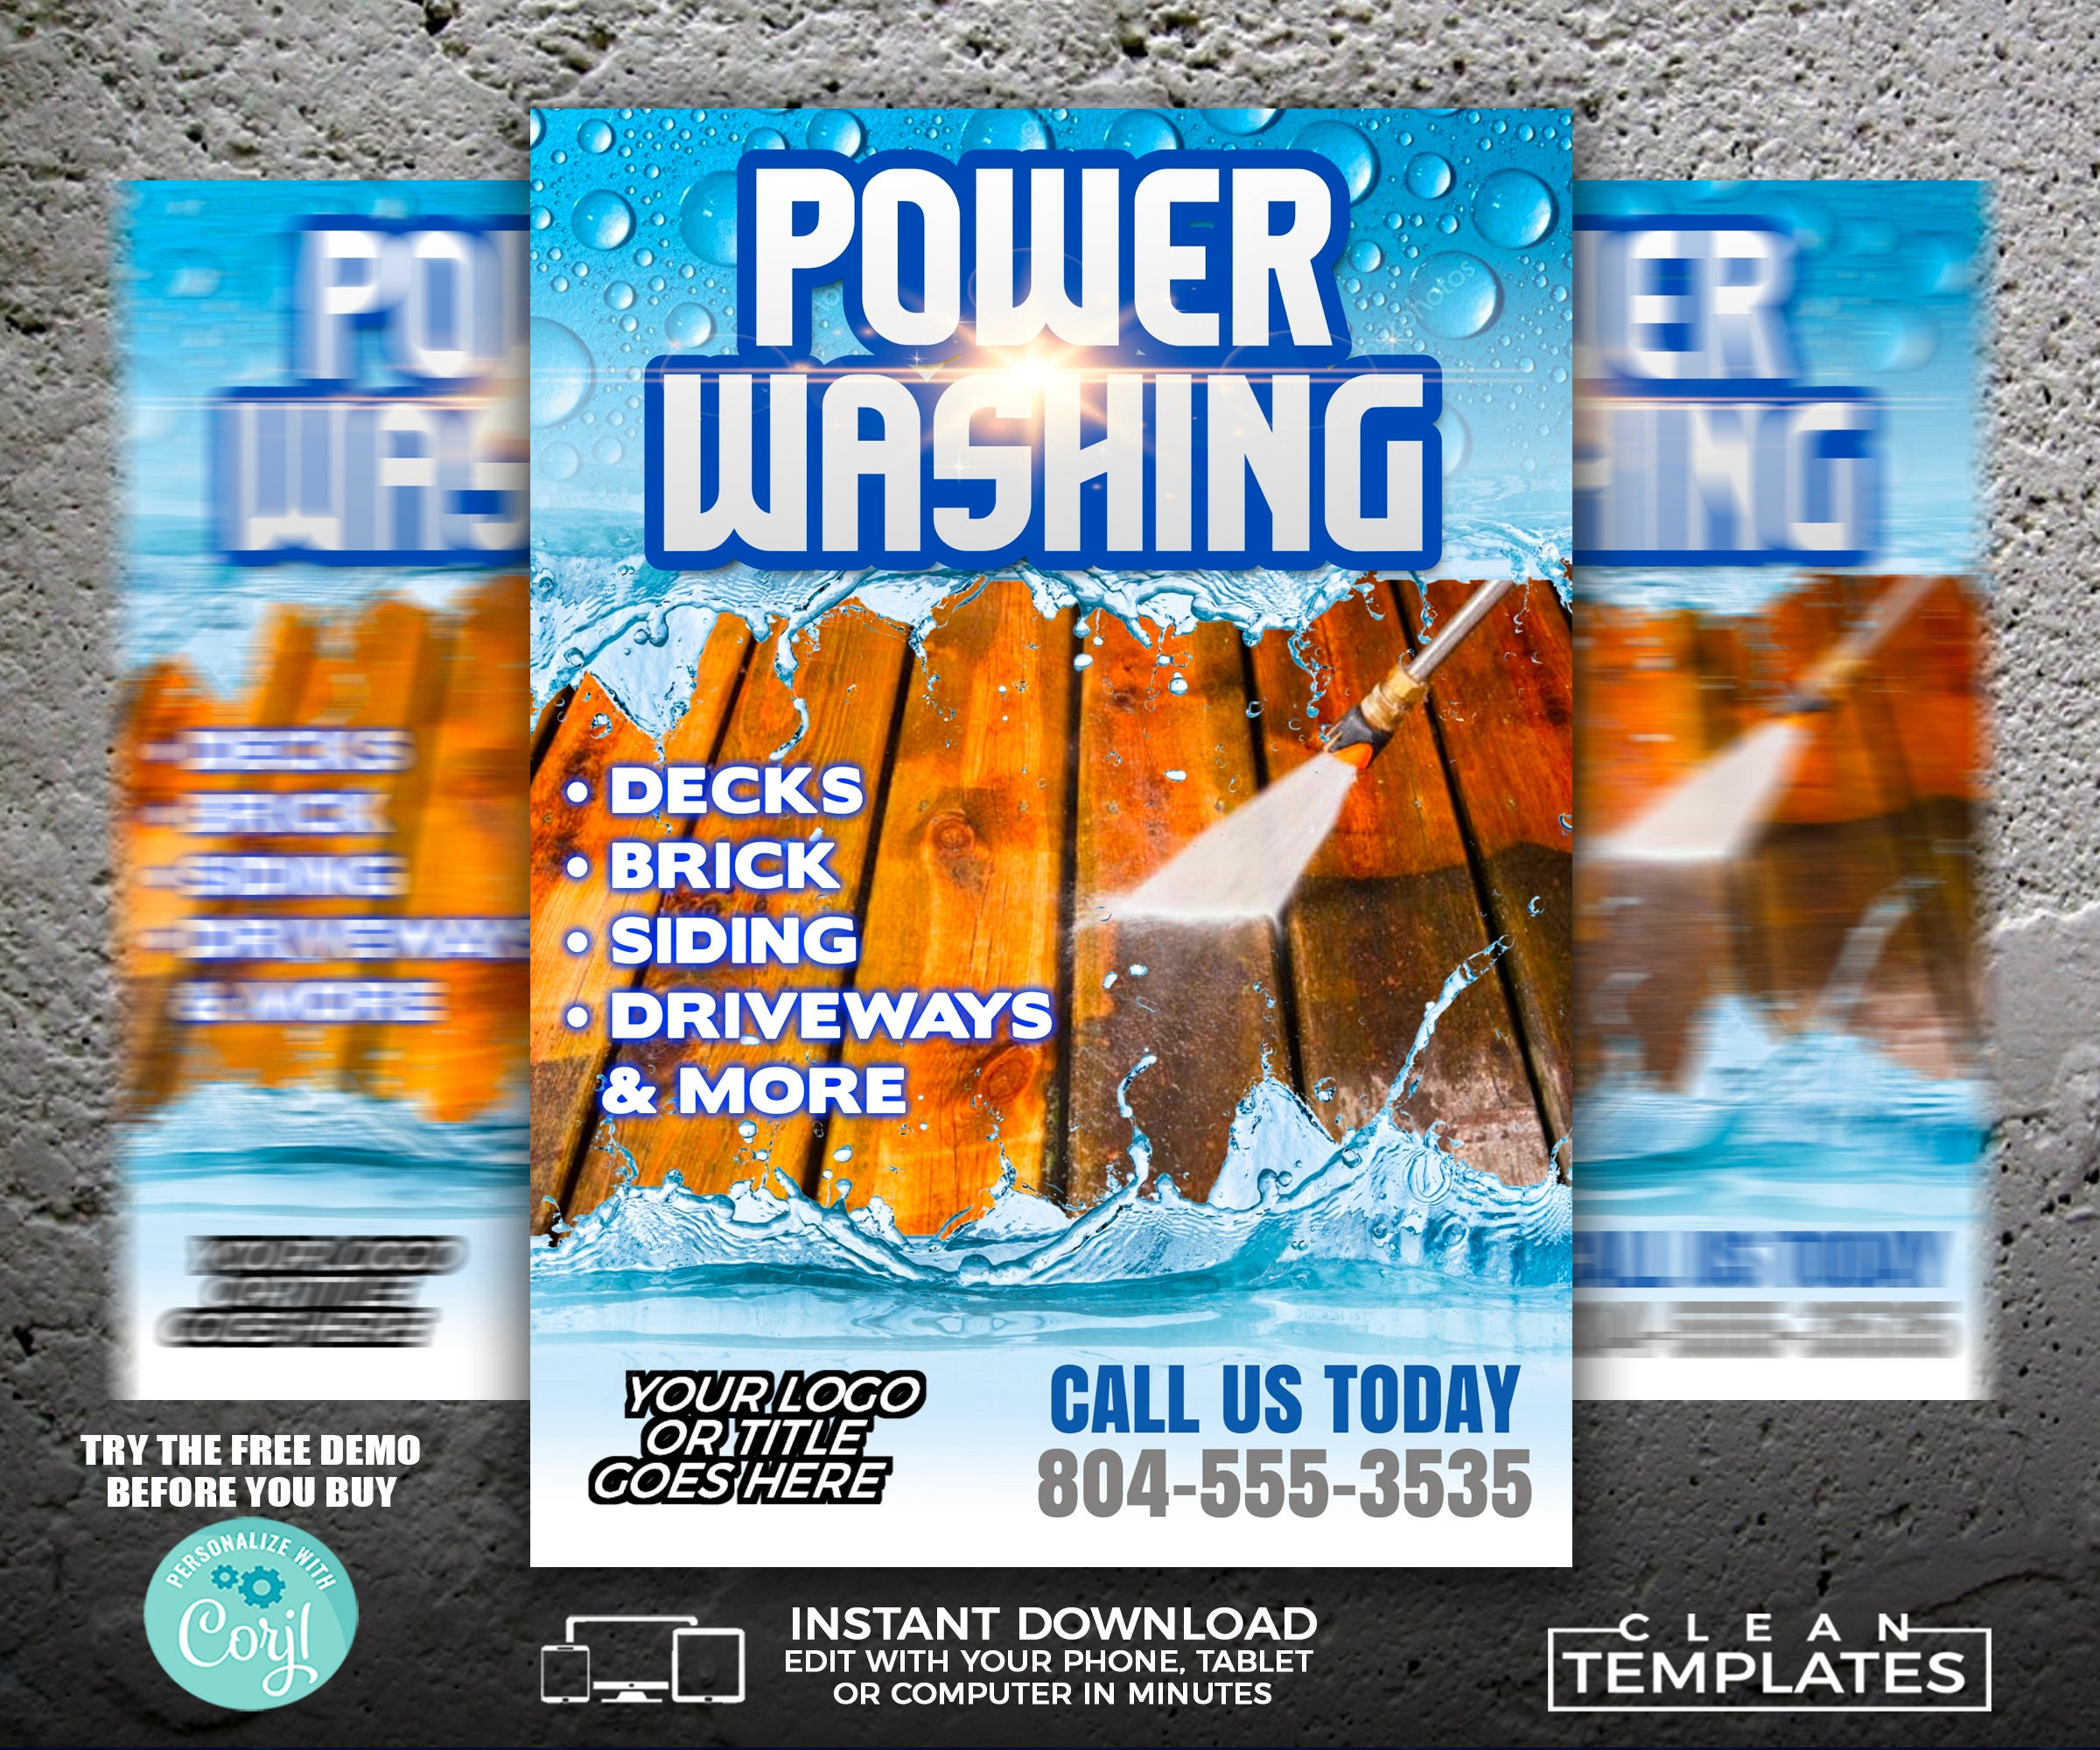 power-washing-flyer-edit-online-5x7-digital-printable-do-it-yourself-corjl-template